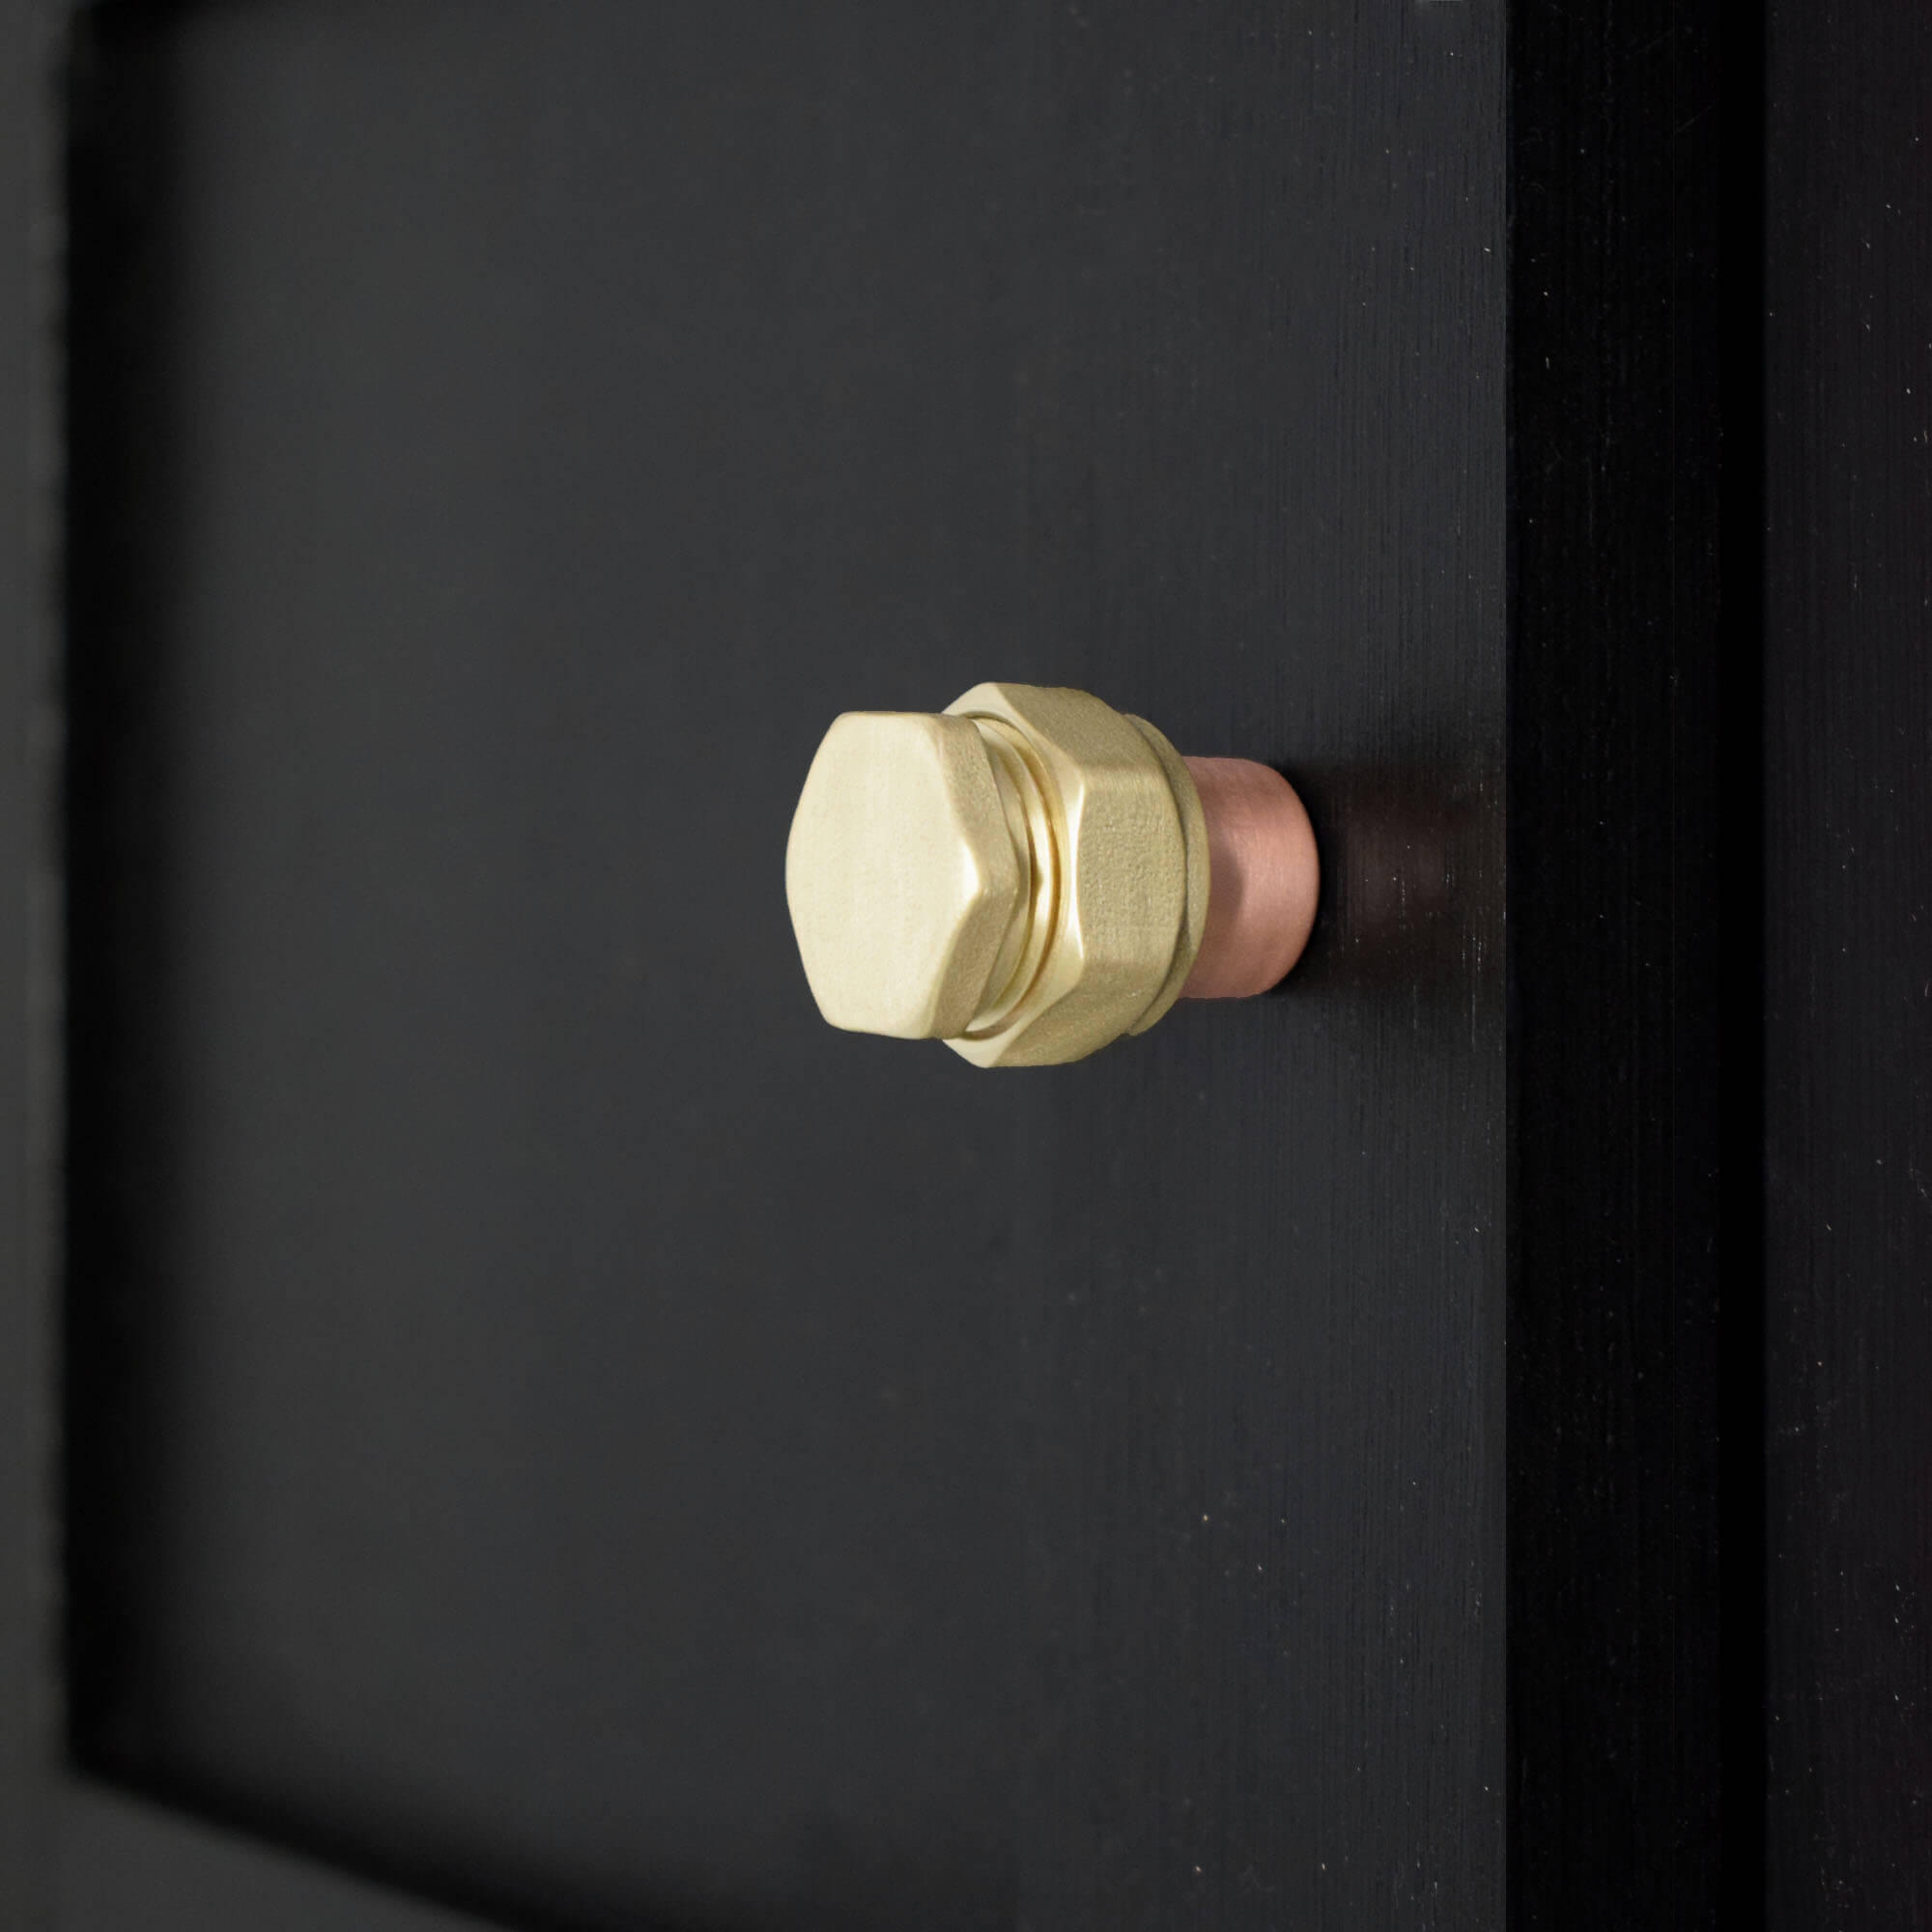 Copper and brass raised knob bolt on black background